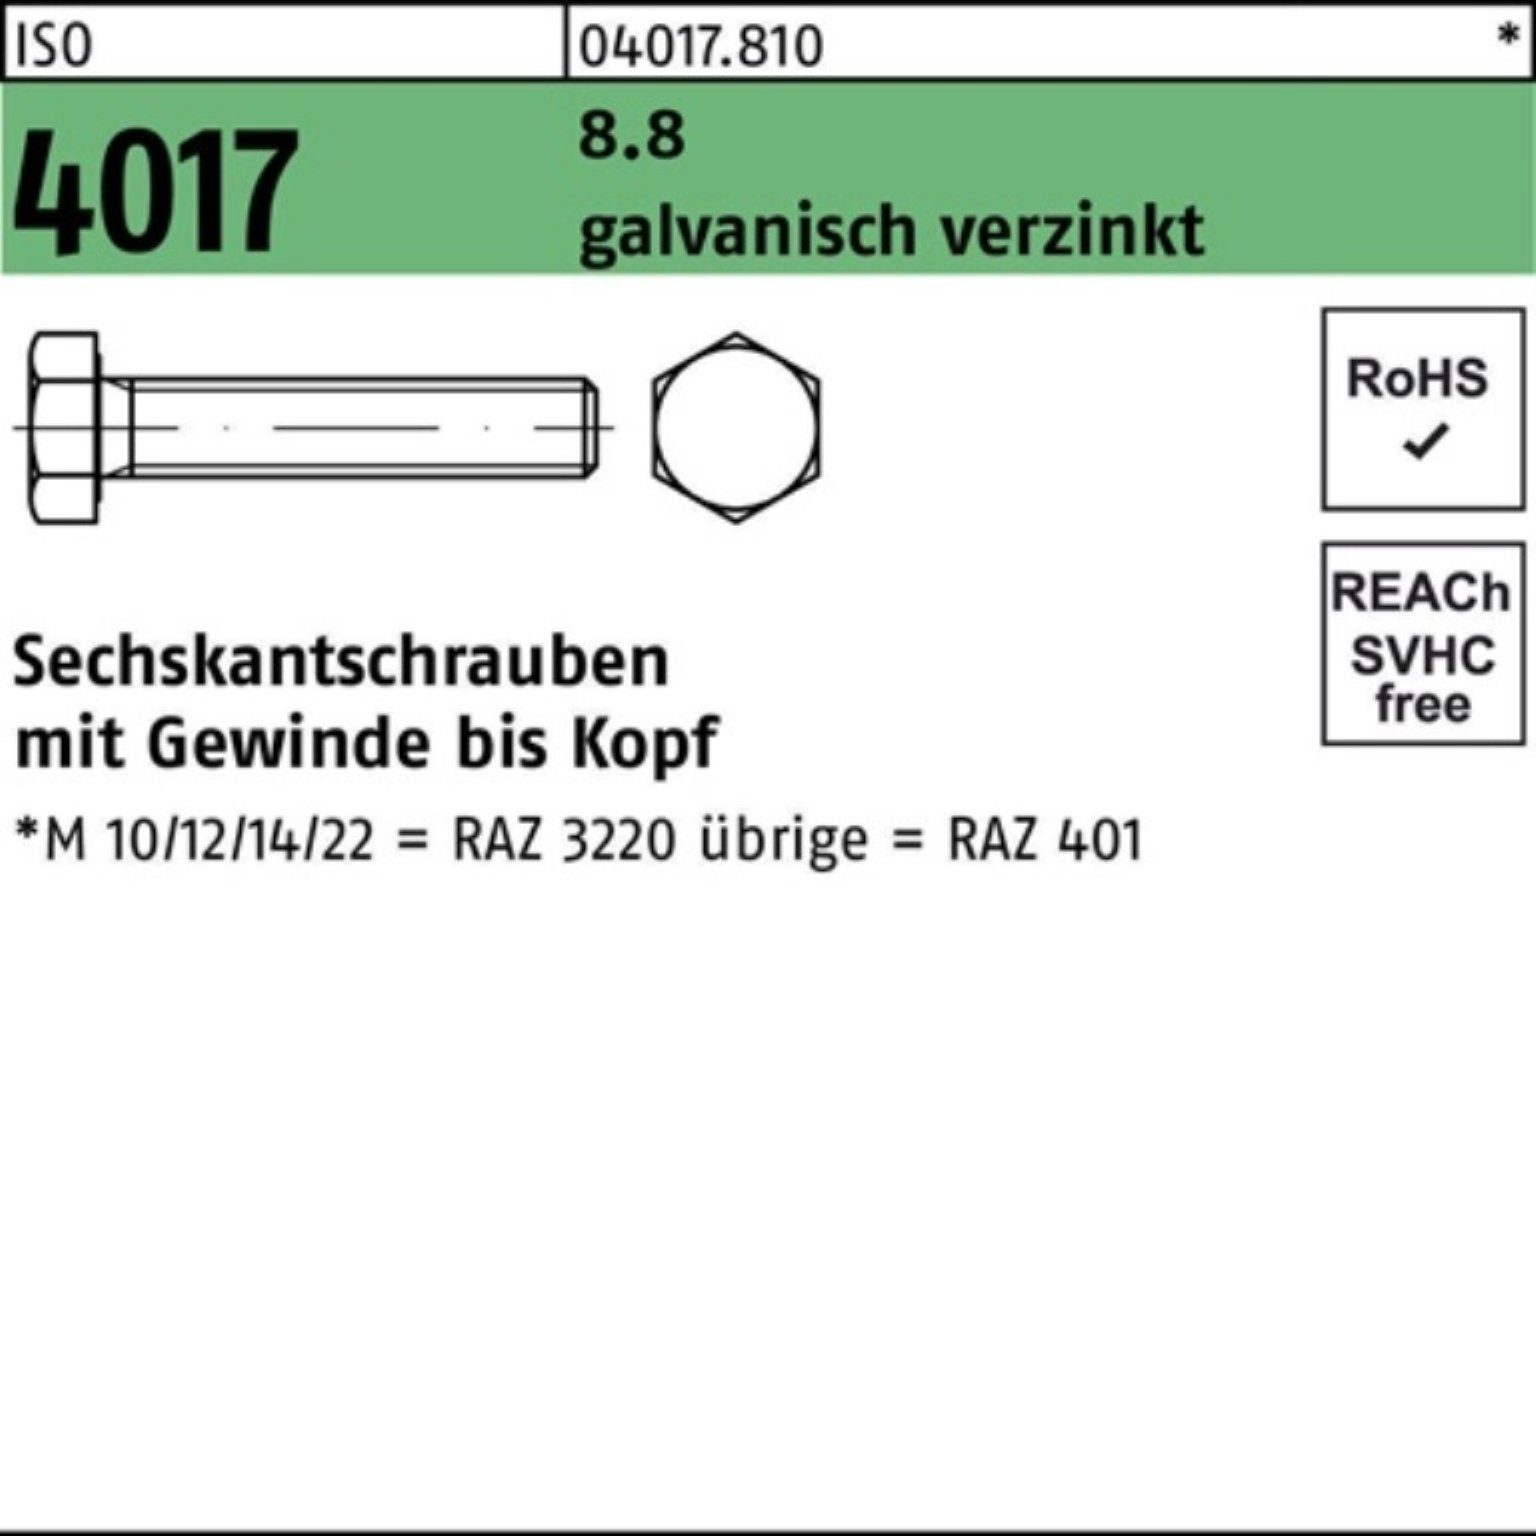 Bufab Sechskantschraube 200er Pack ISO galv.verz. St VG 200 Sechskantschraube 12 M10x 4017 8.8